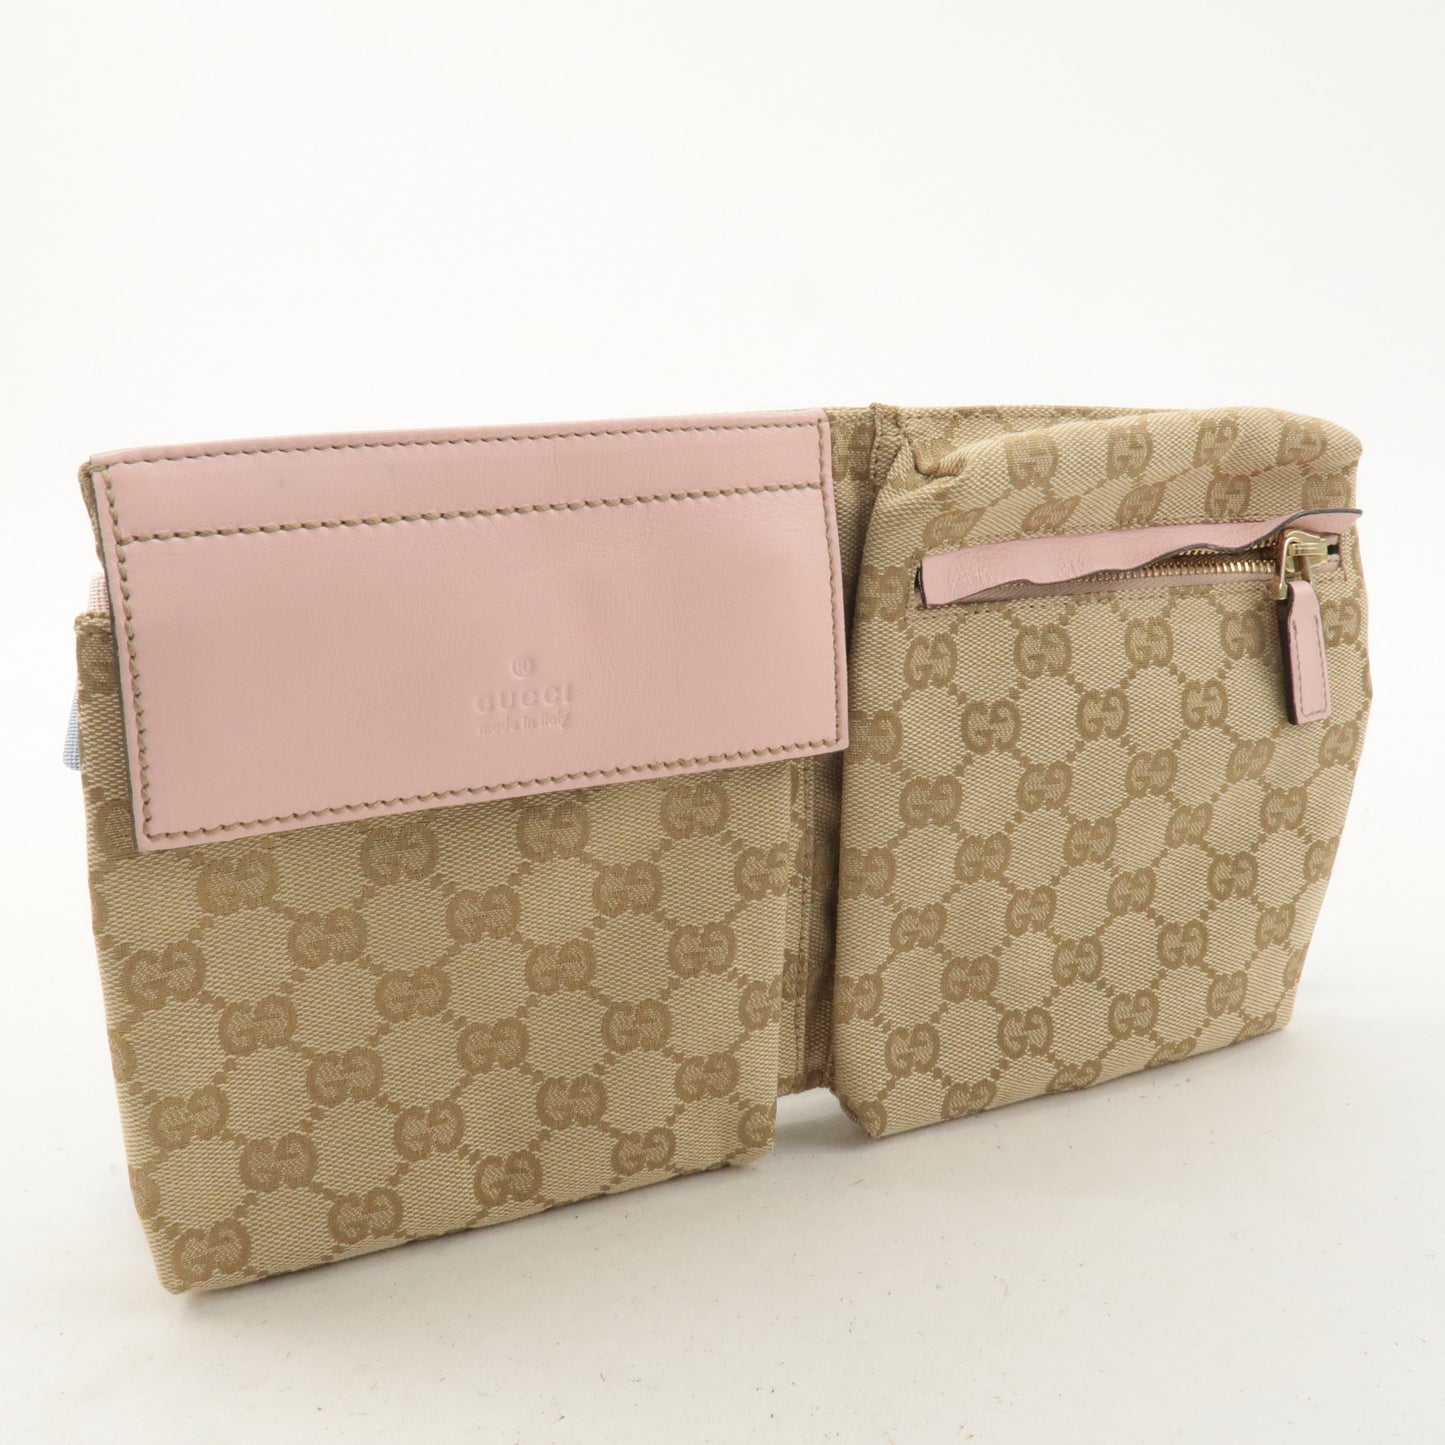 GUCCI GG Canvas Leather Waist Bag Crossbody Bag Beige Pink 28566